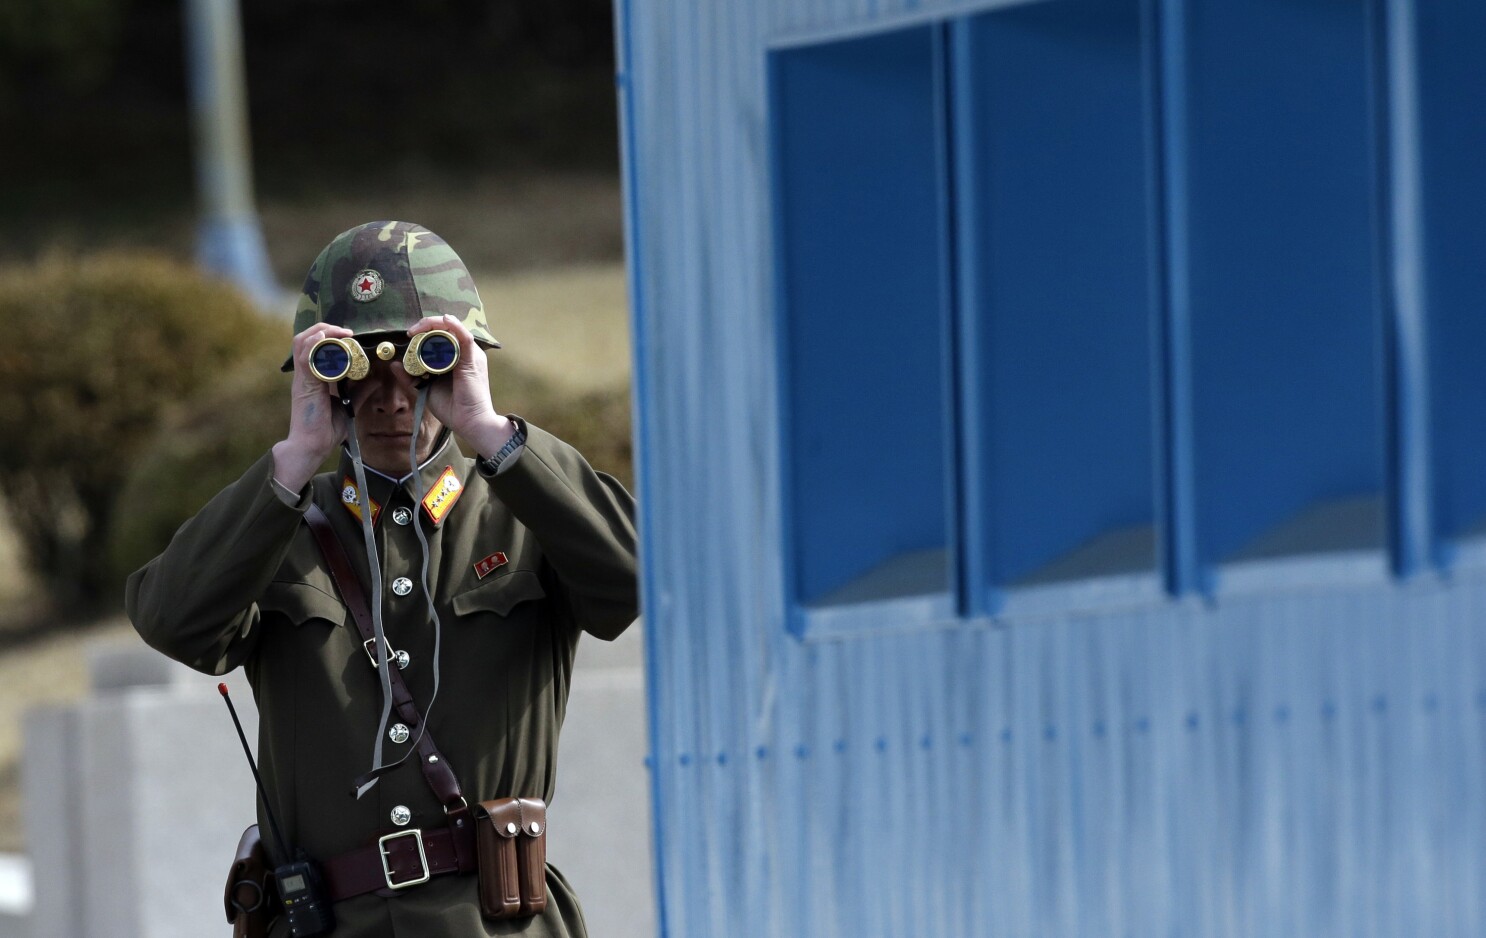 north korean guards